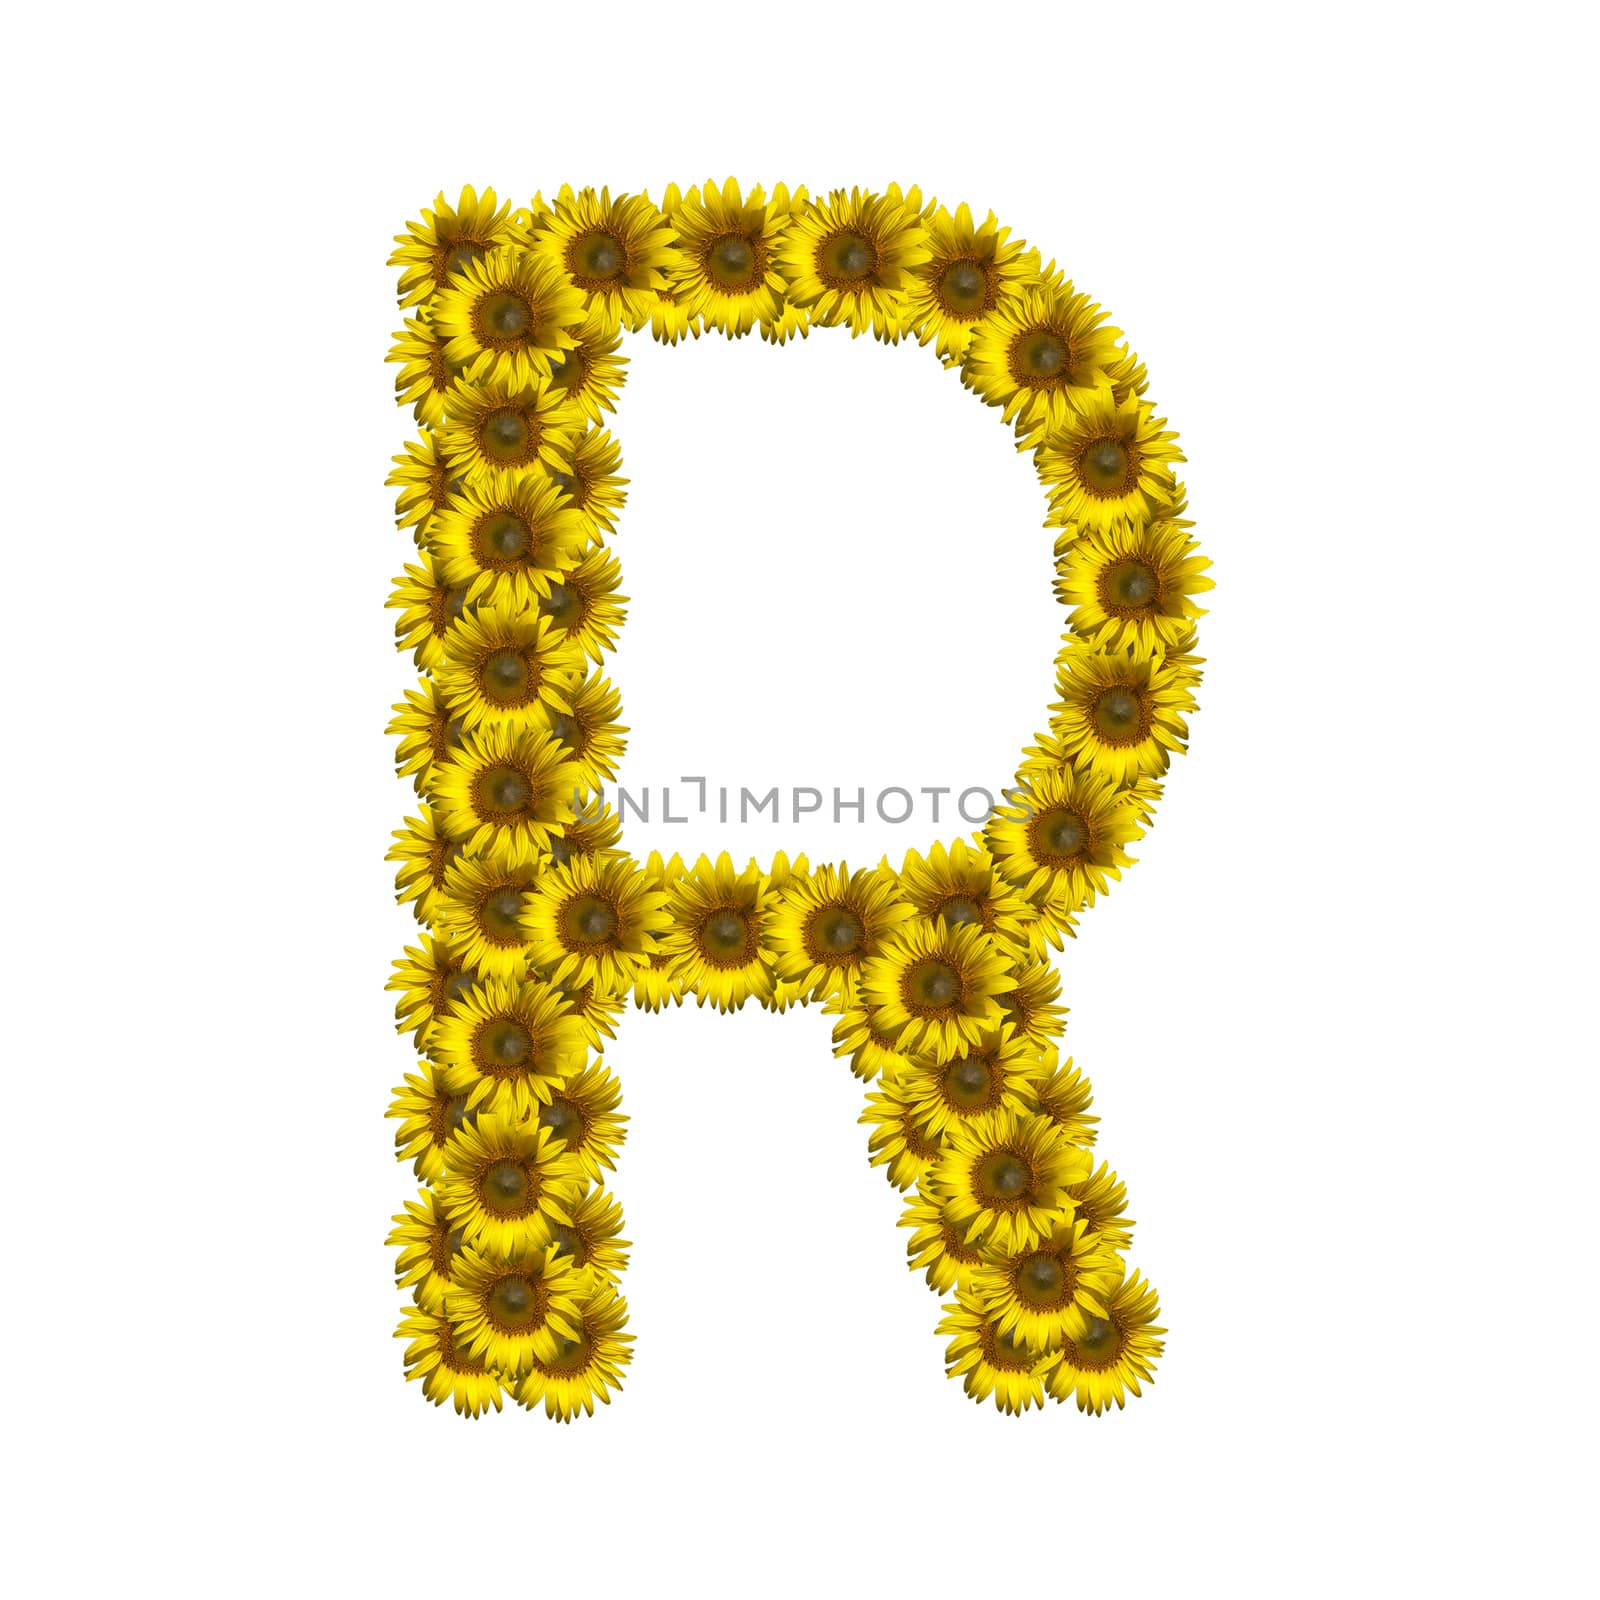 Sunflower alphabet isolated on white background, letter R